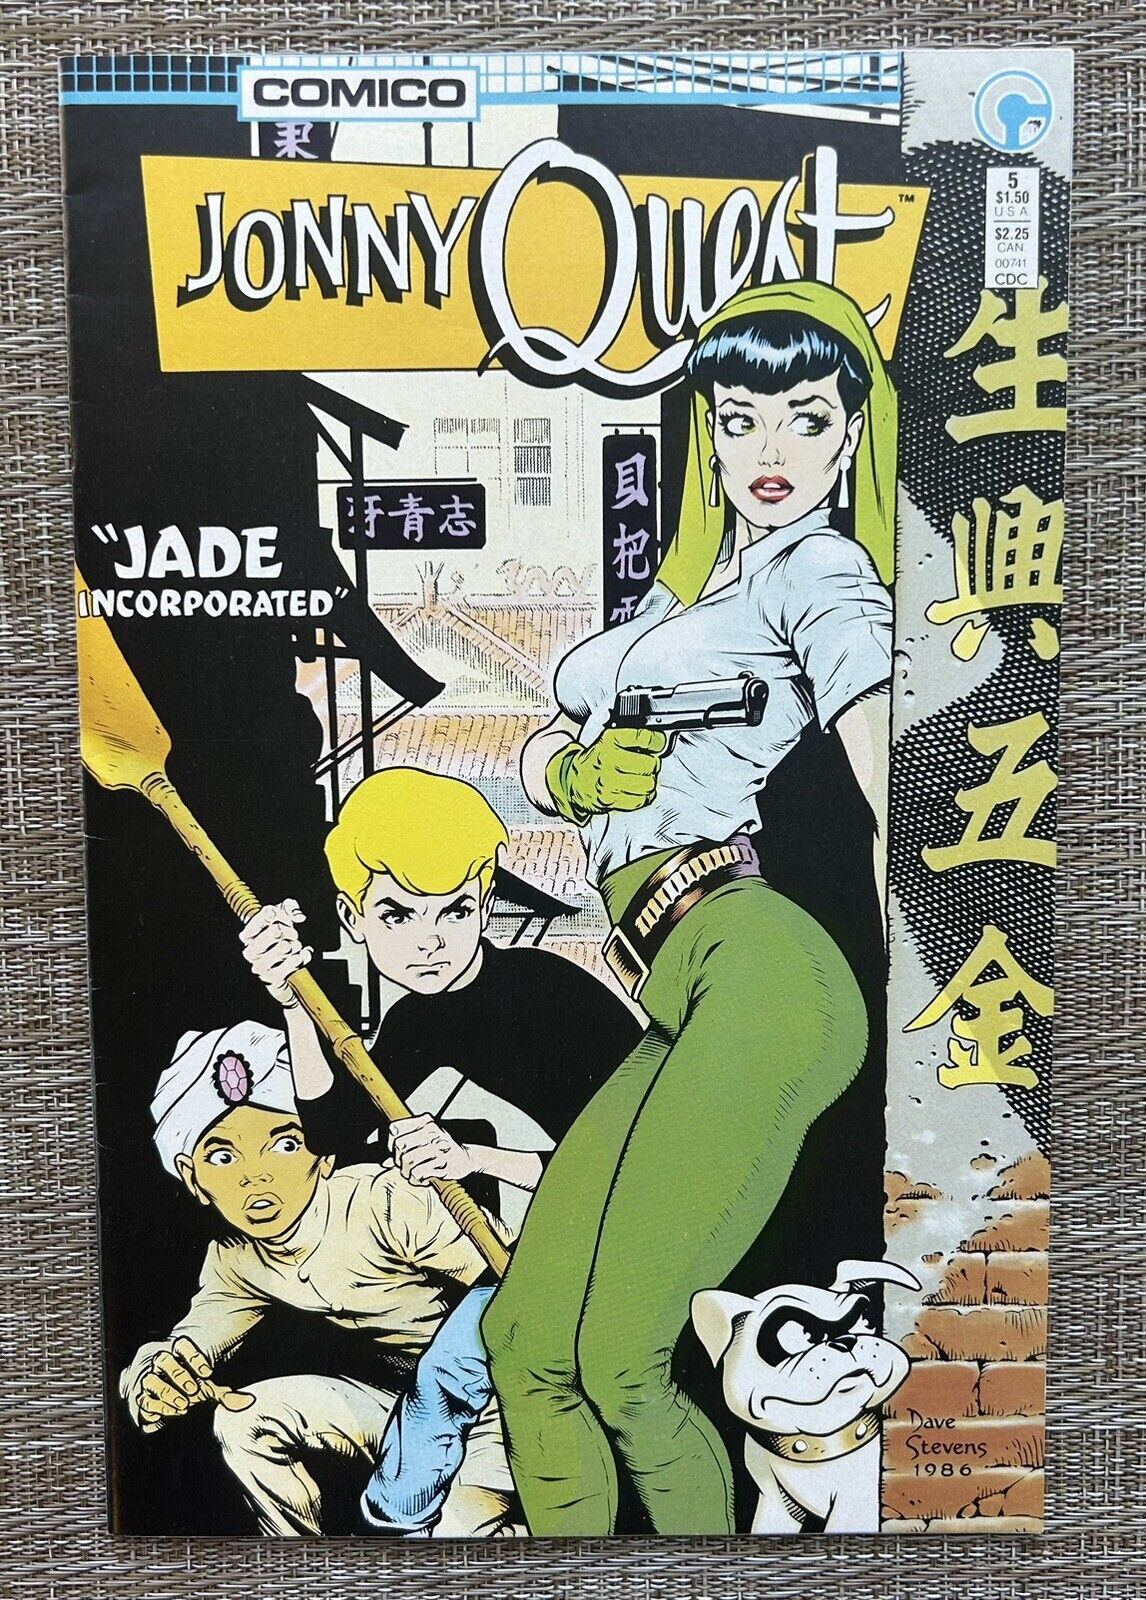 JONNY QUEST # 5, Dave Stevens Cover, Comico Comic Book 1986